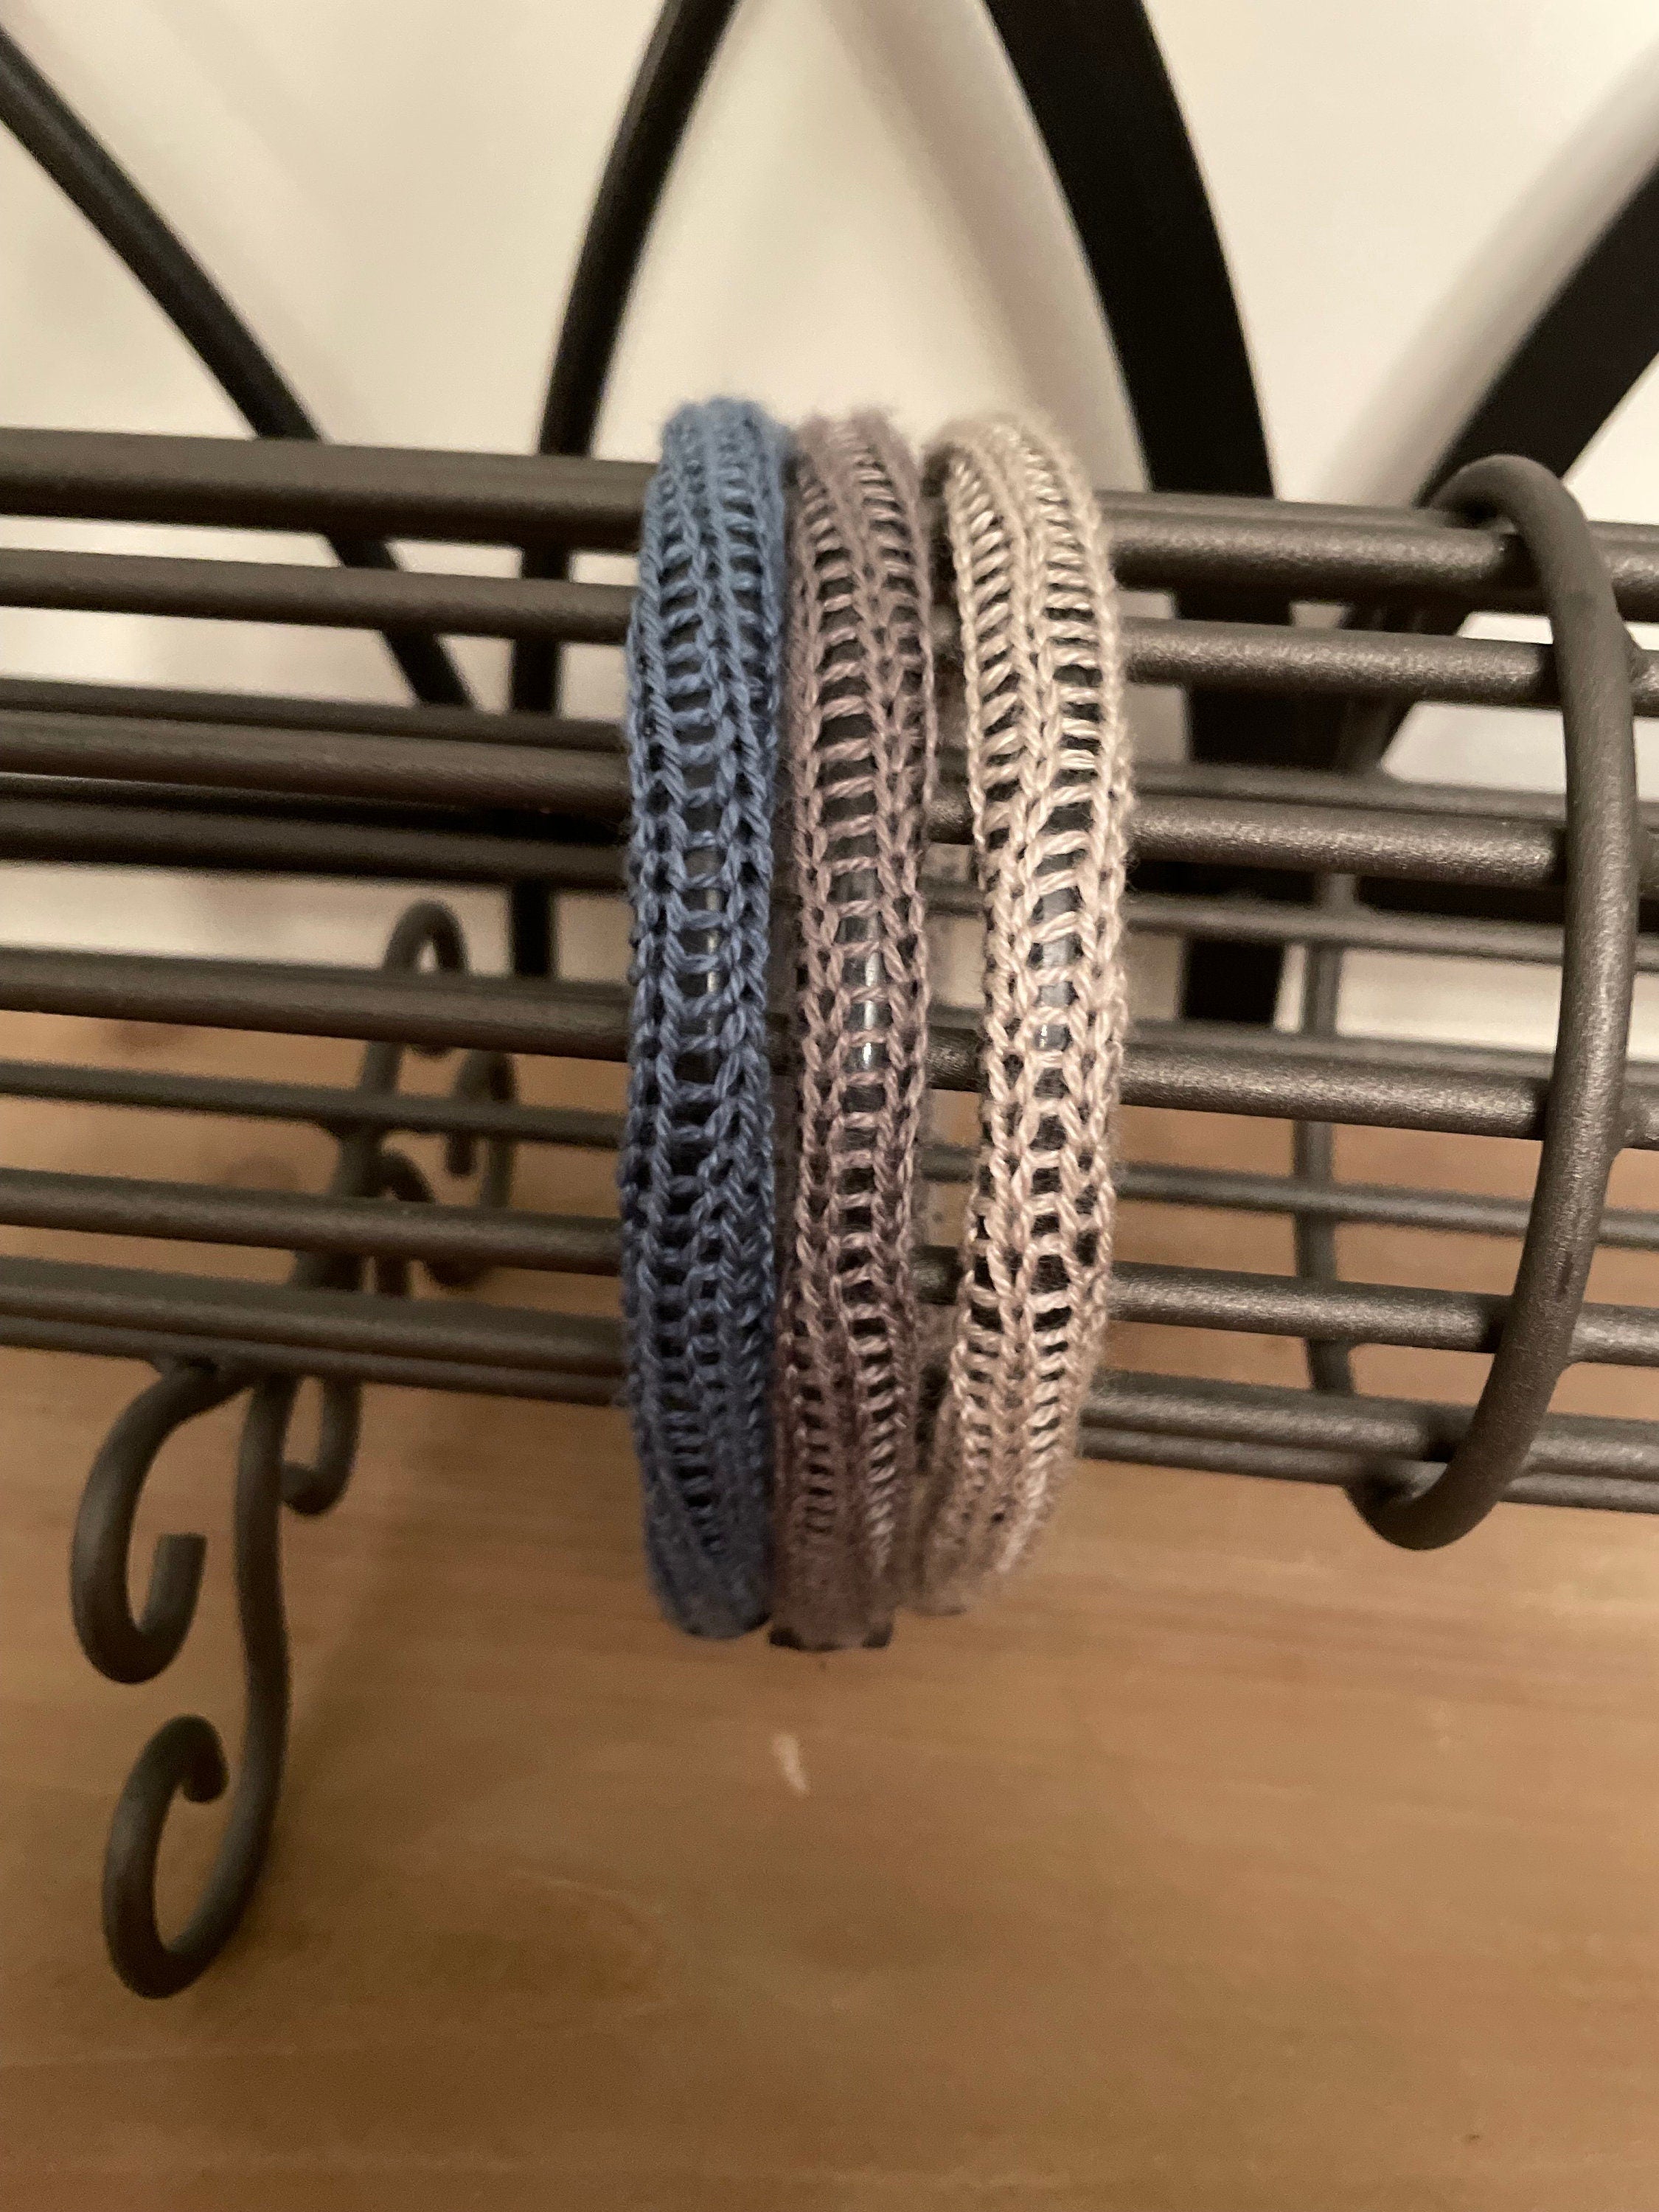 Set of 3 Knit Net Headbands